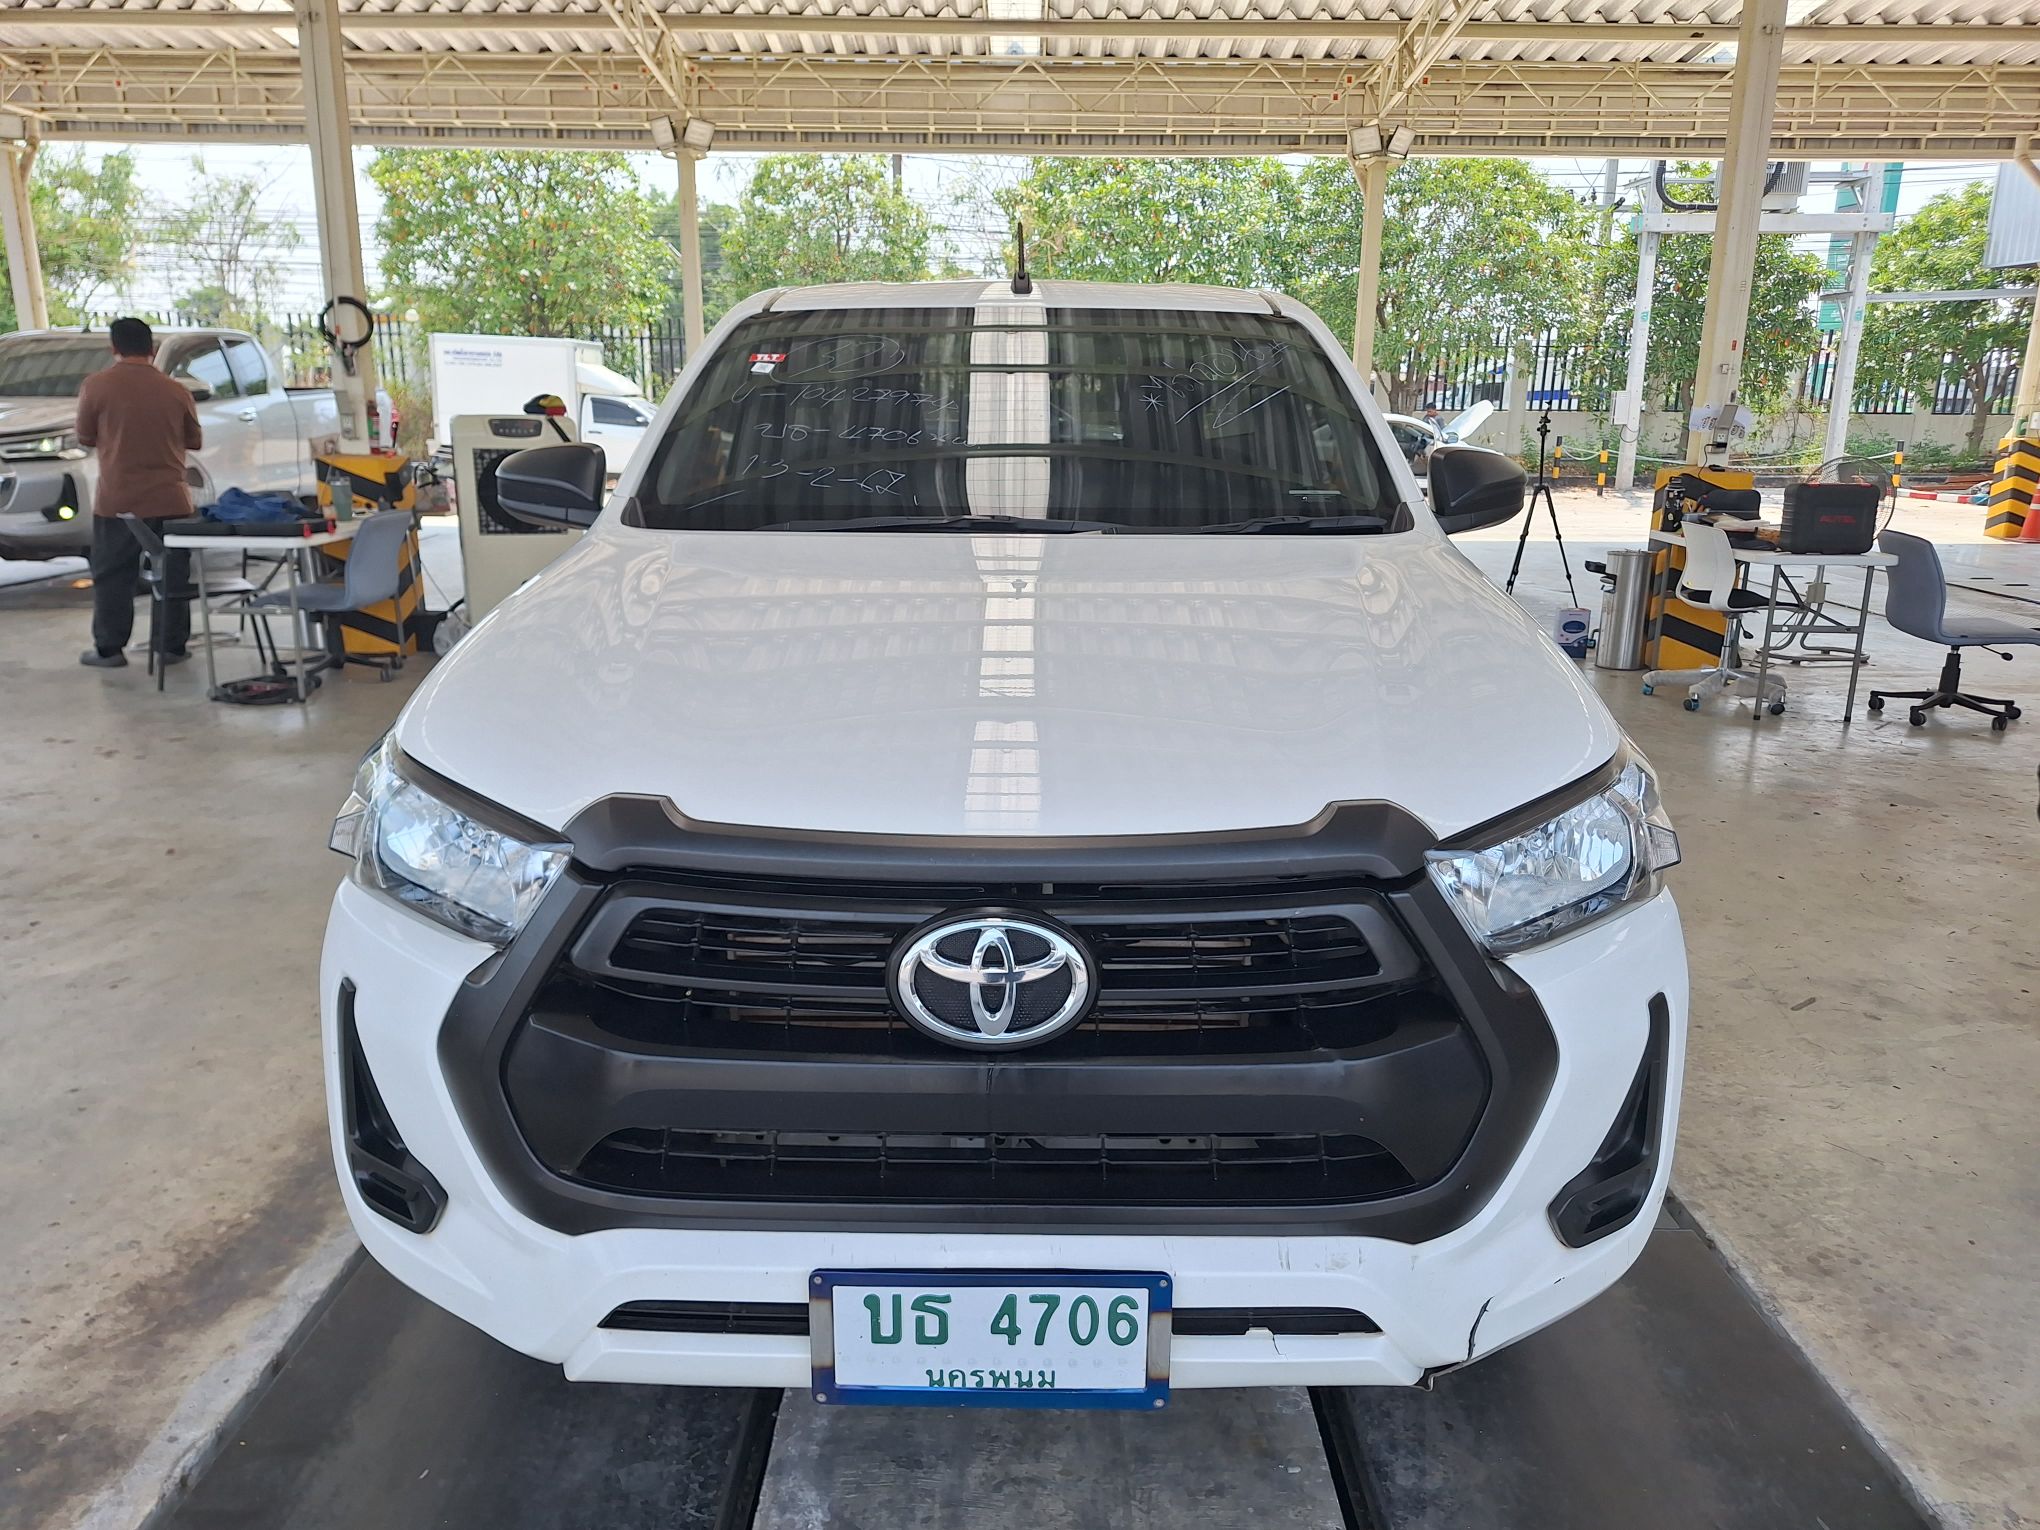 2021 - Toyota car